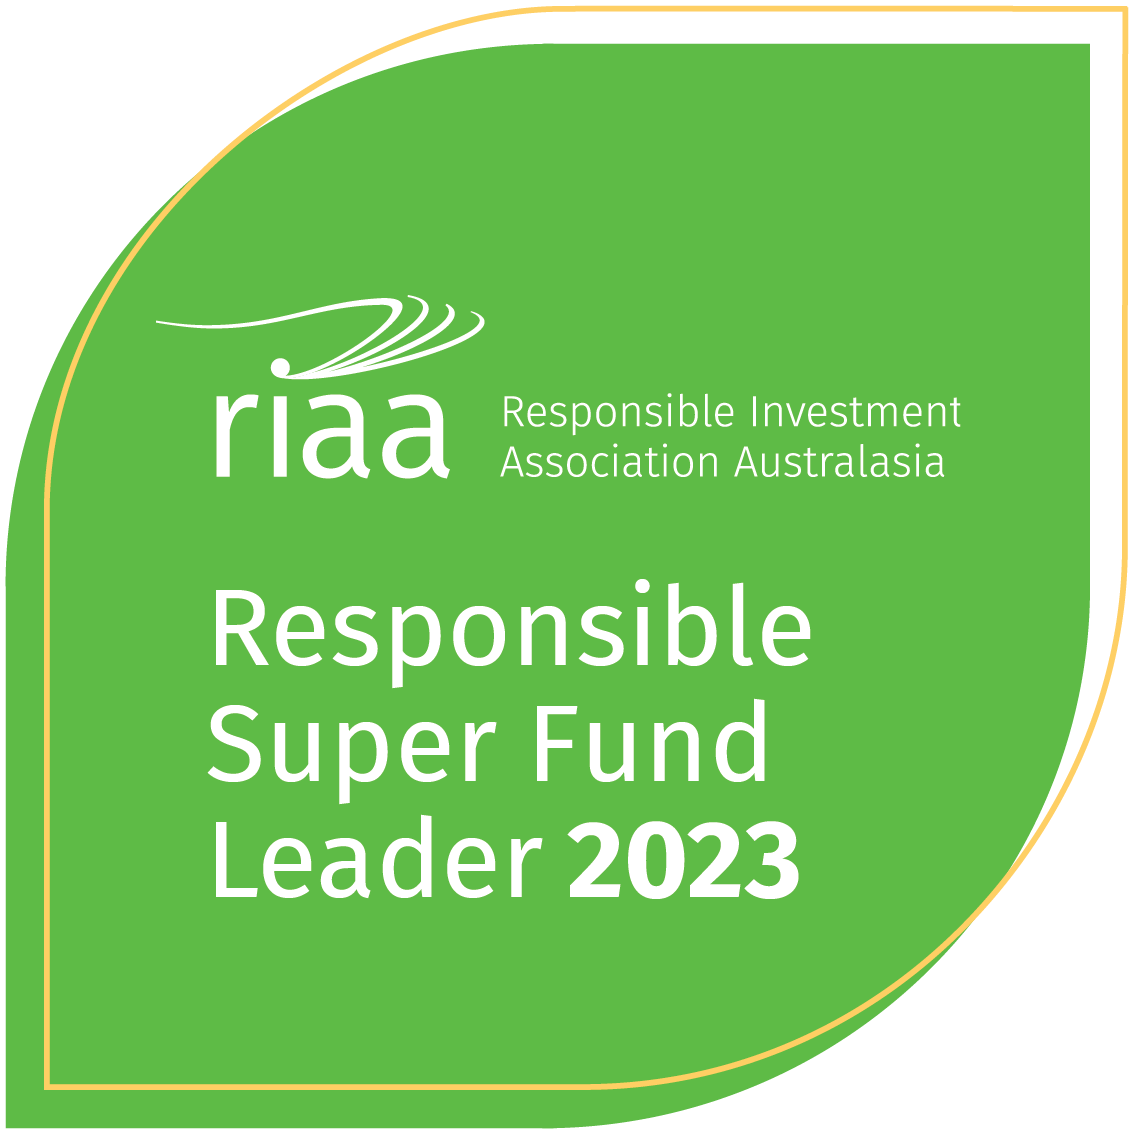 Responsible Investment Association Australasia (RIAA) 2023